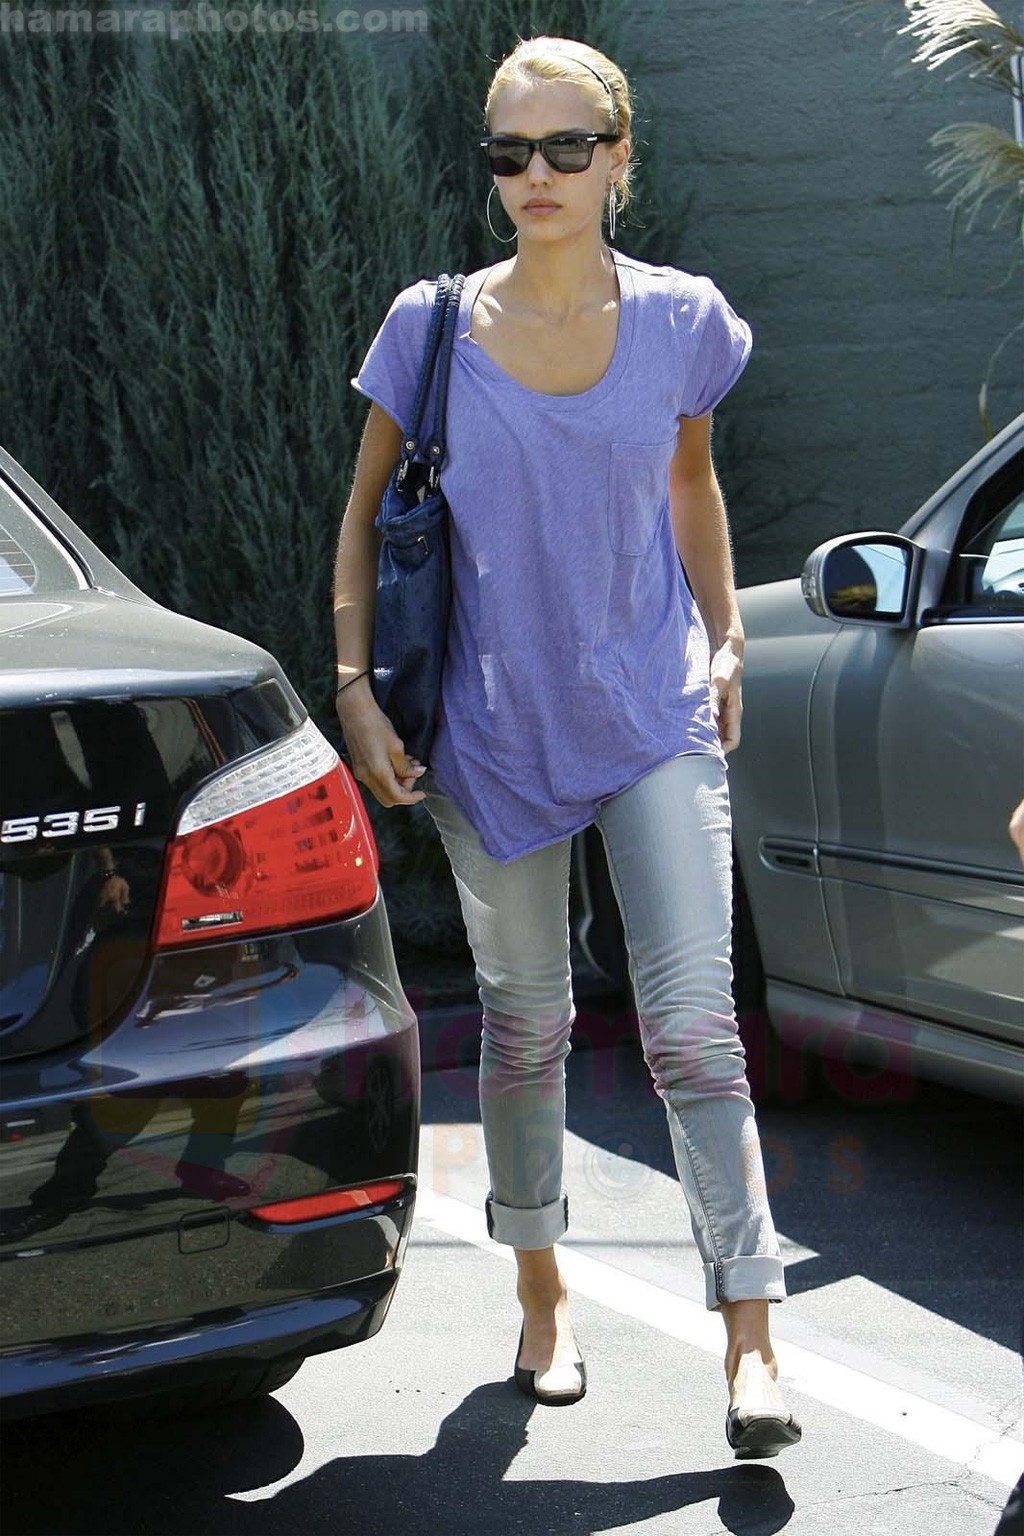 Jessica Alba out running errands in Santa Monica, Los Angeles, California on 27th August 2009 - IANS-WENN 